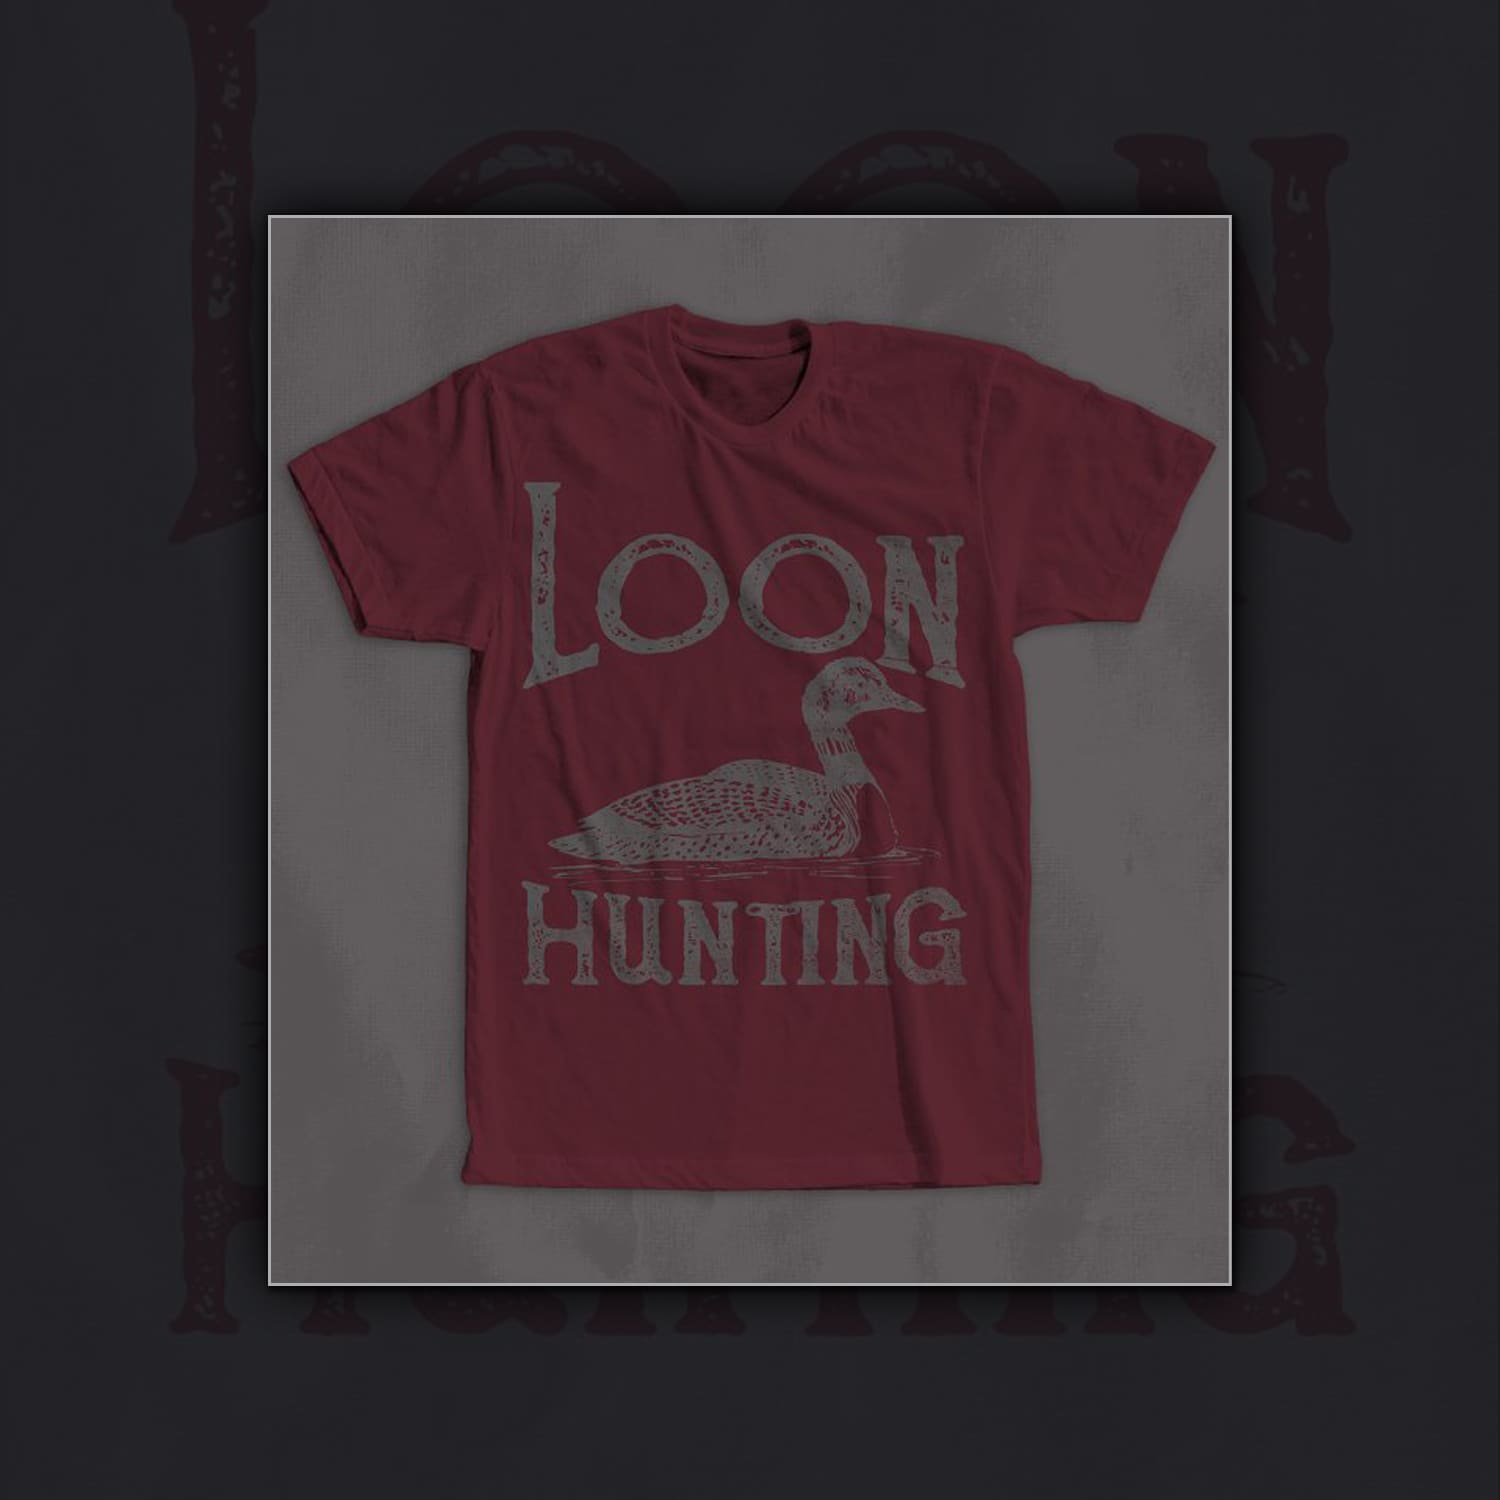 Loon Hunting T-Shirt Design.